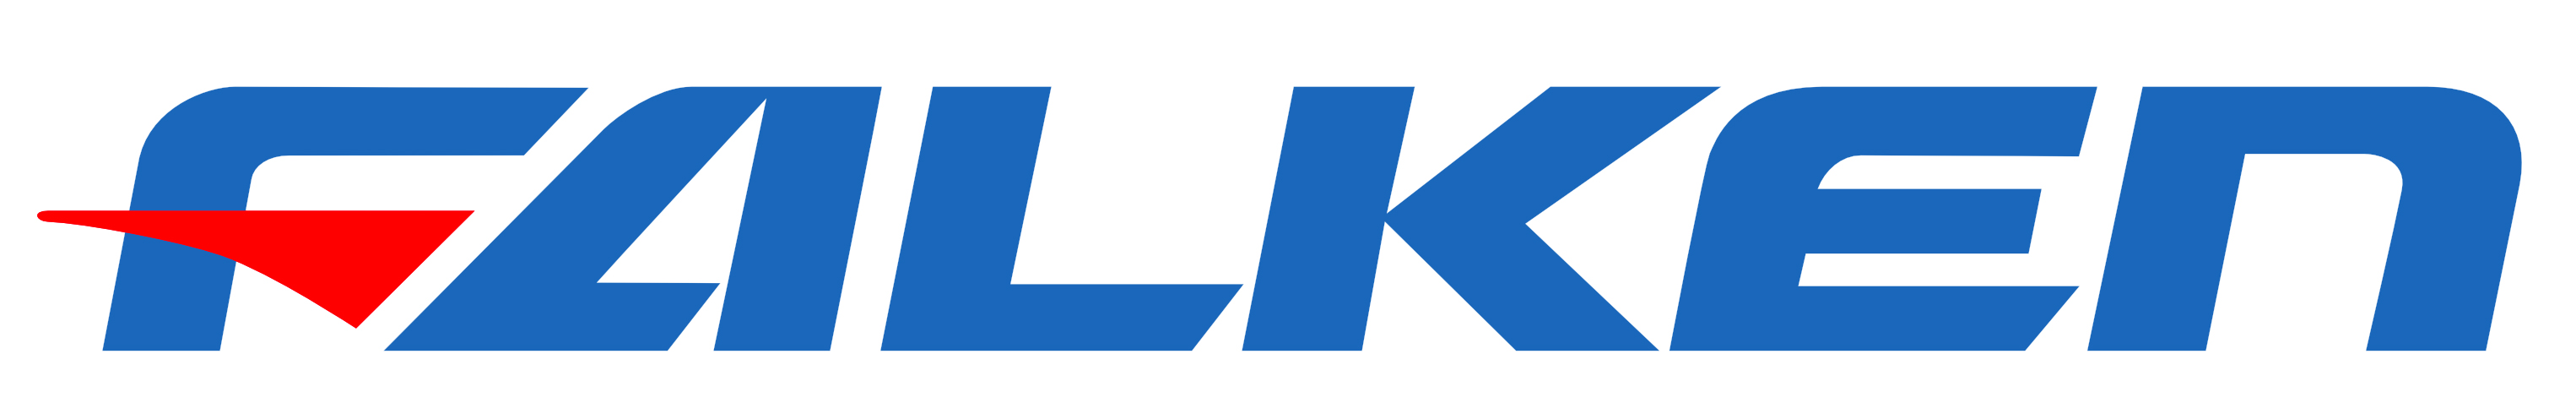 https://www.beadlok.com/Logo/falken-logo.jpg